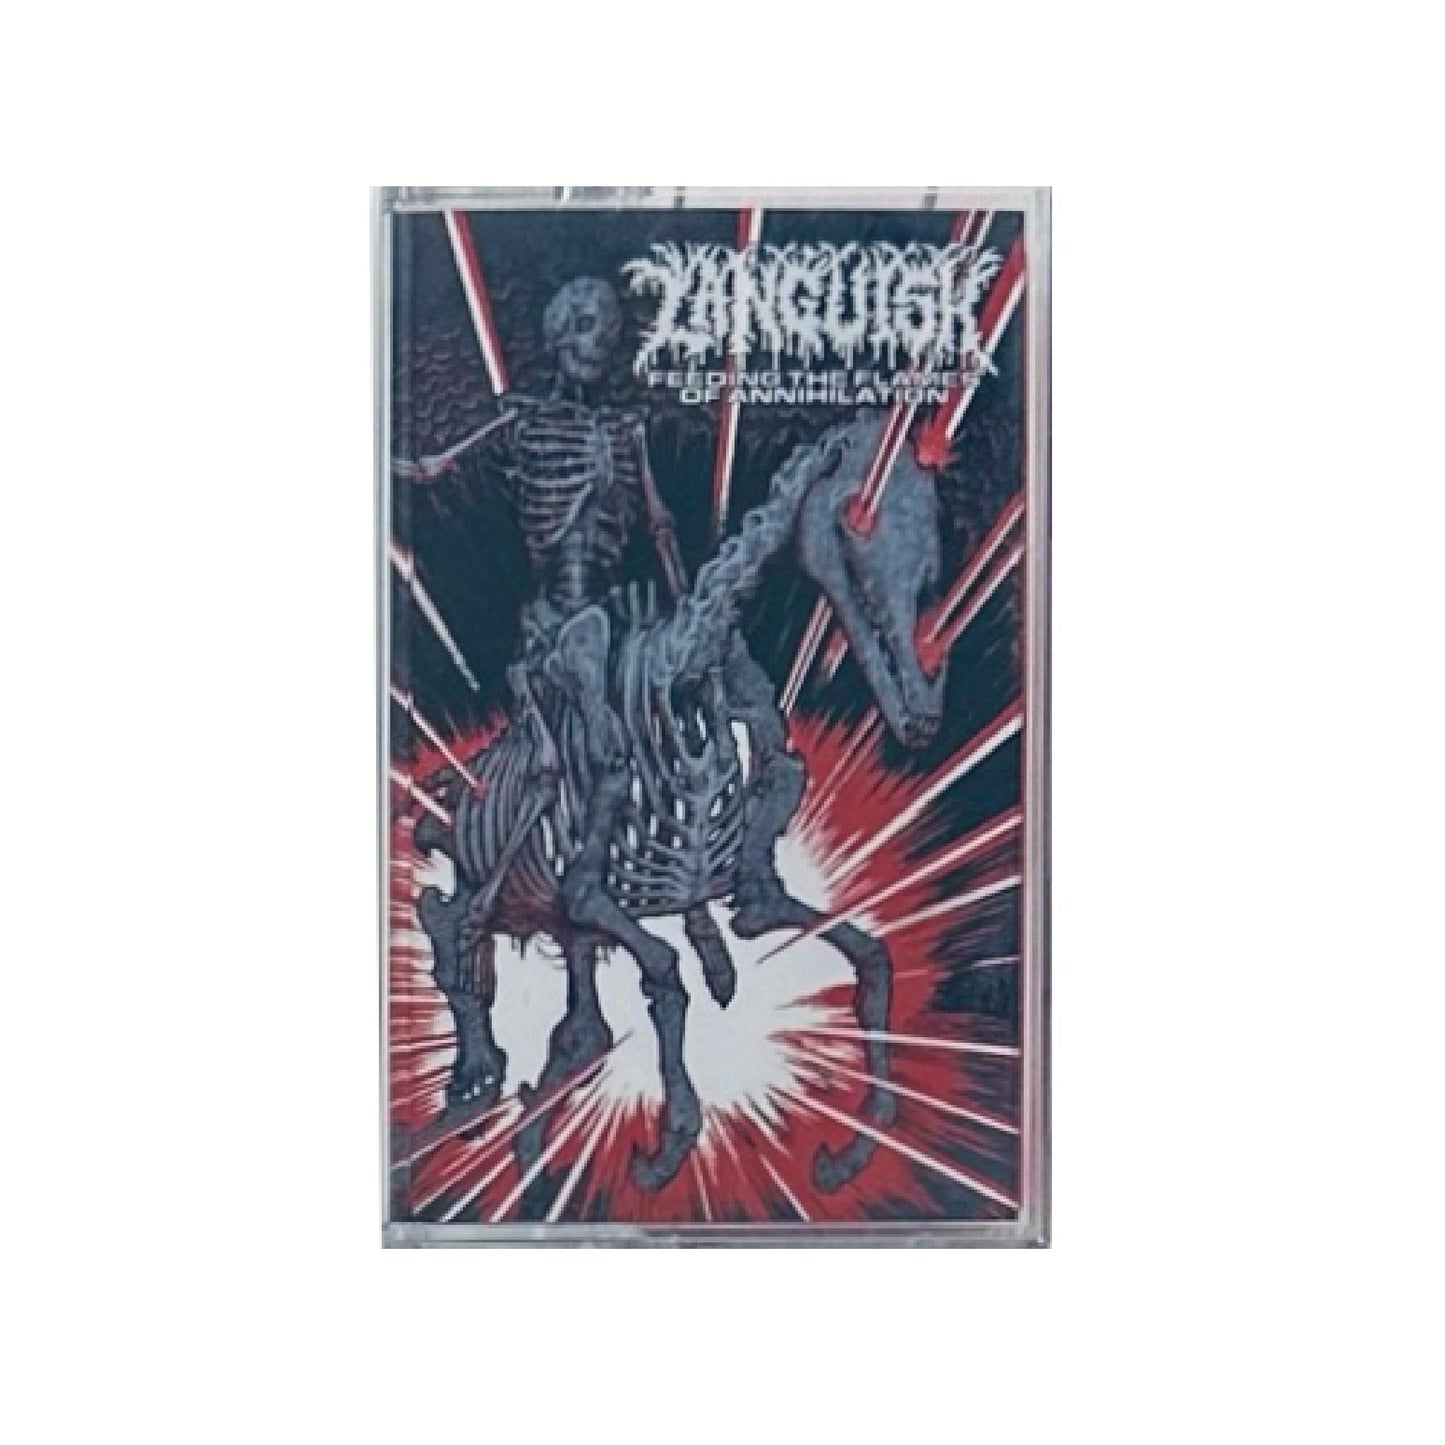 Languish - Feeding The Flames Of Annihilation CS  (cassette tape)